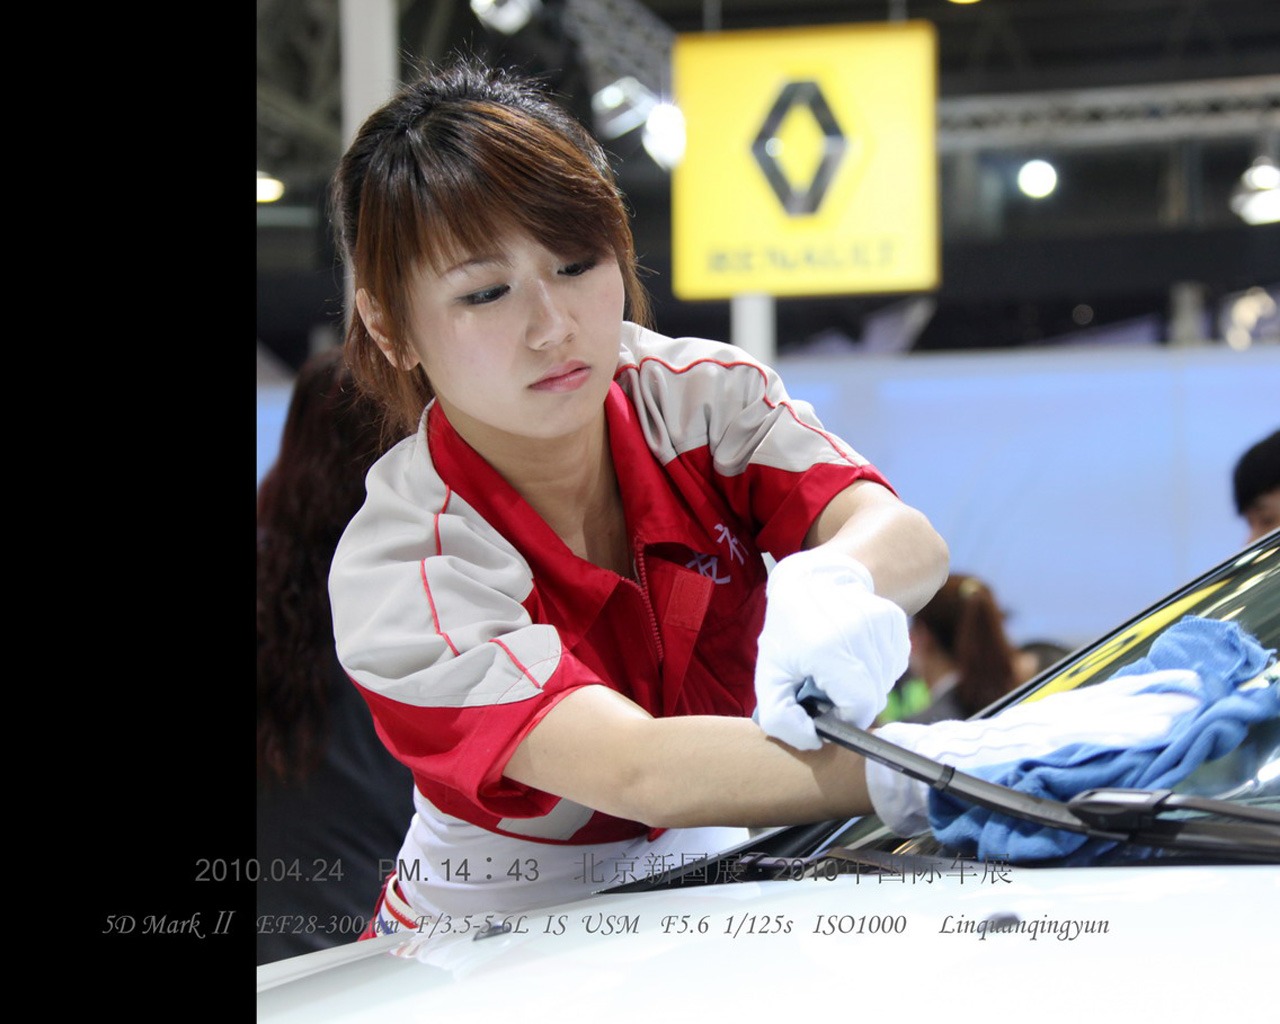 2010-4-24 Beijing International Auto Show (Linquan Qing Yun works) #20 - 1280x1024